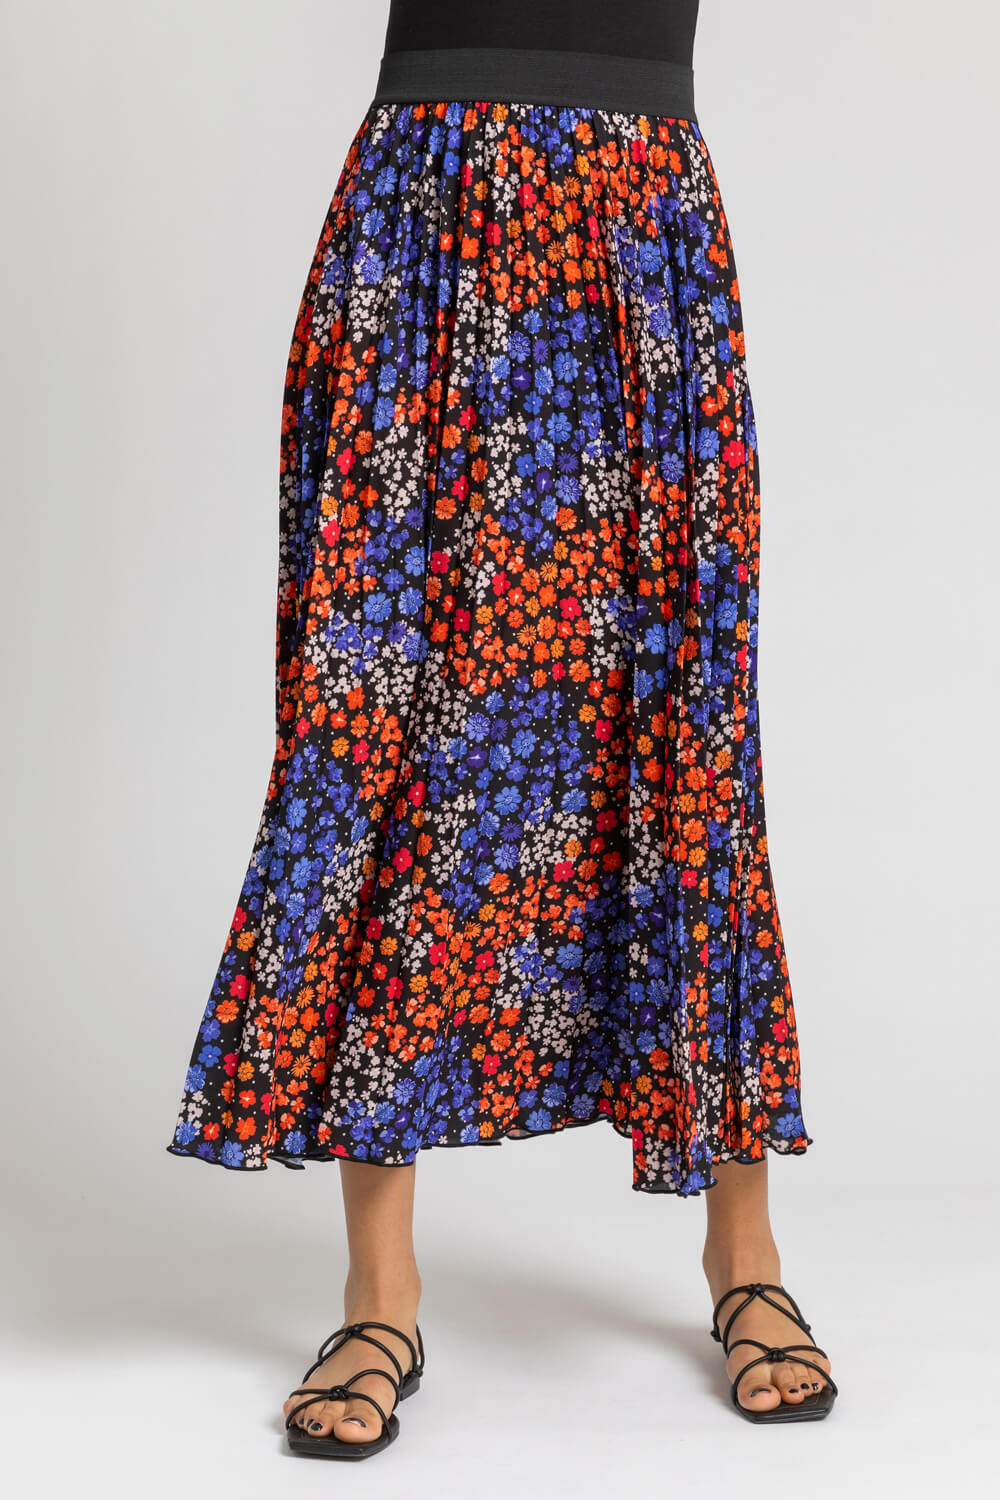 ORANGE Floral Spot Print Pleated Maxi Skirt, Image 3 of 4